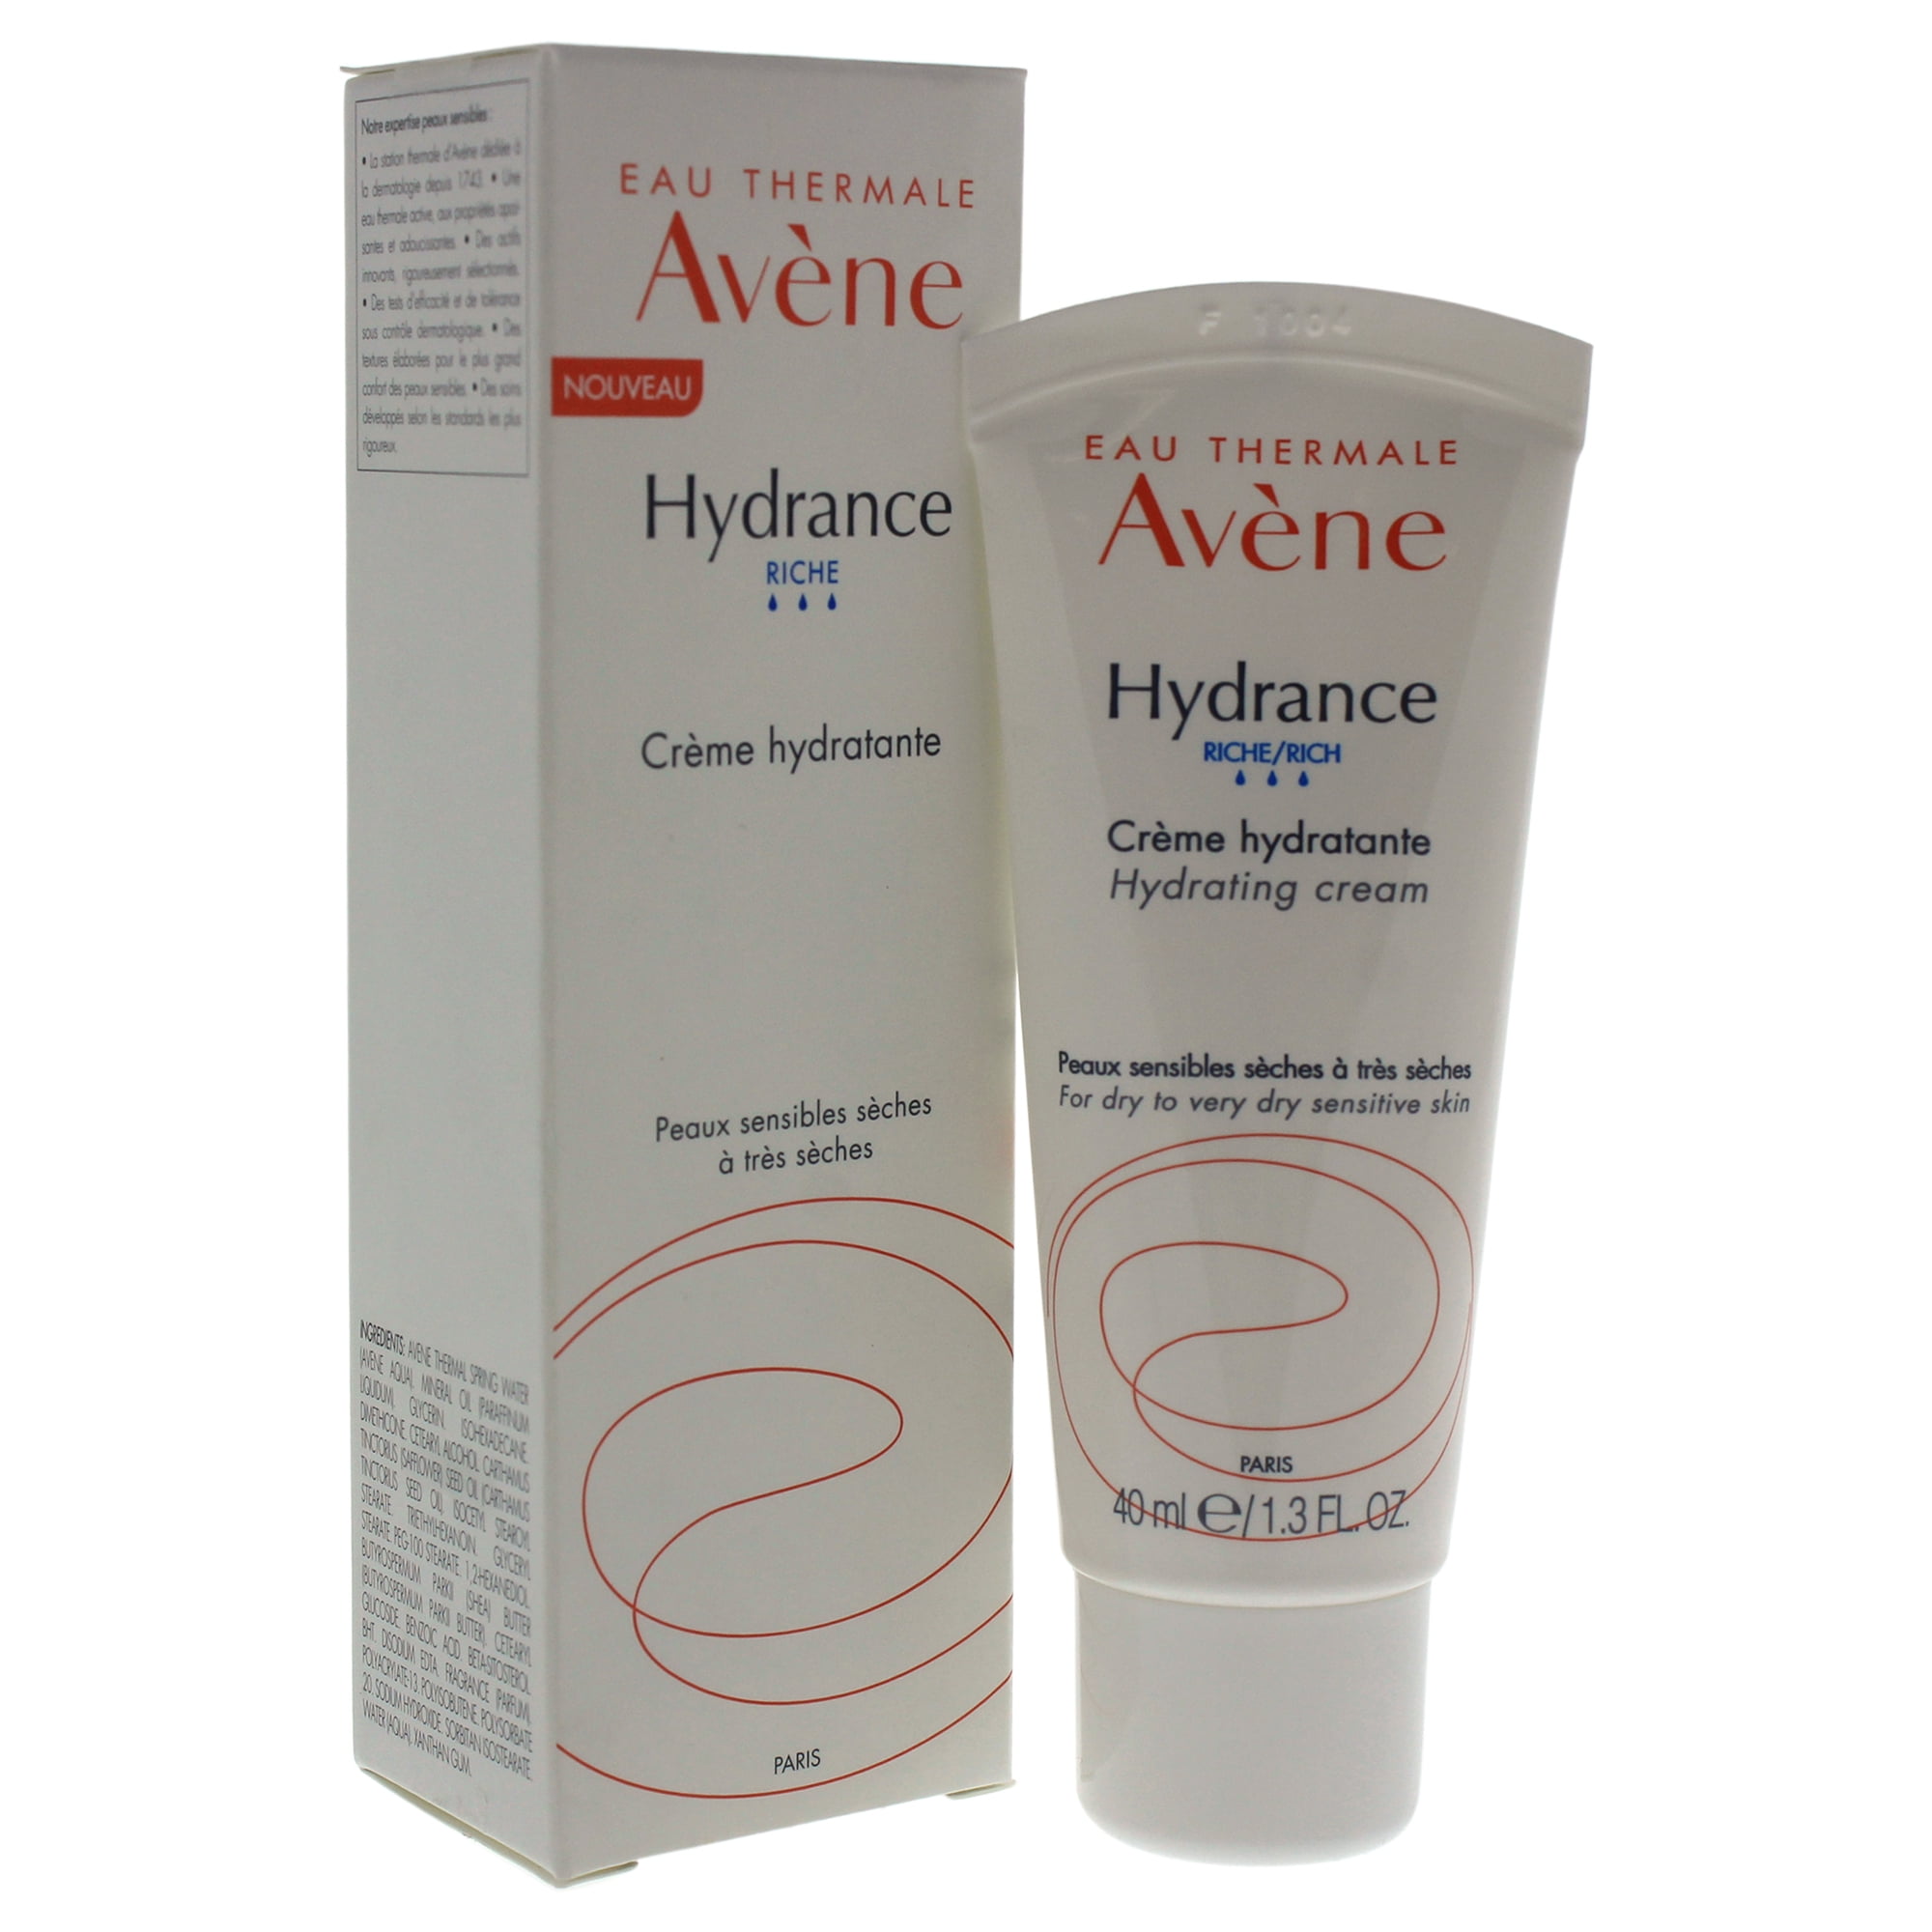 Avene - Eau Thermale Avene Hydrance Rich Cream hydrating Cream - 1.35 ...